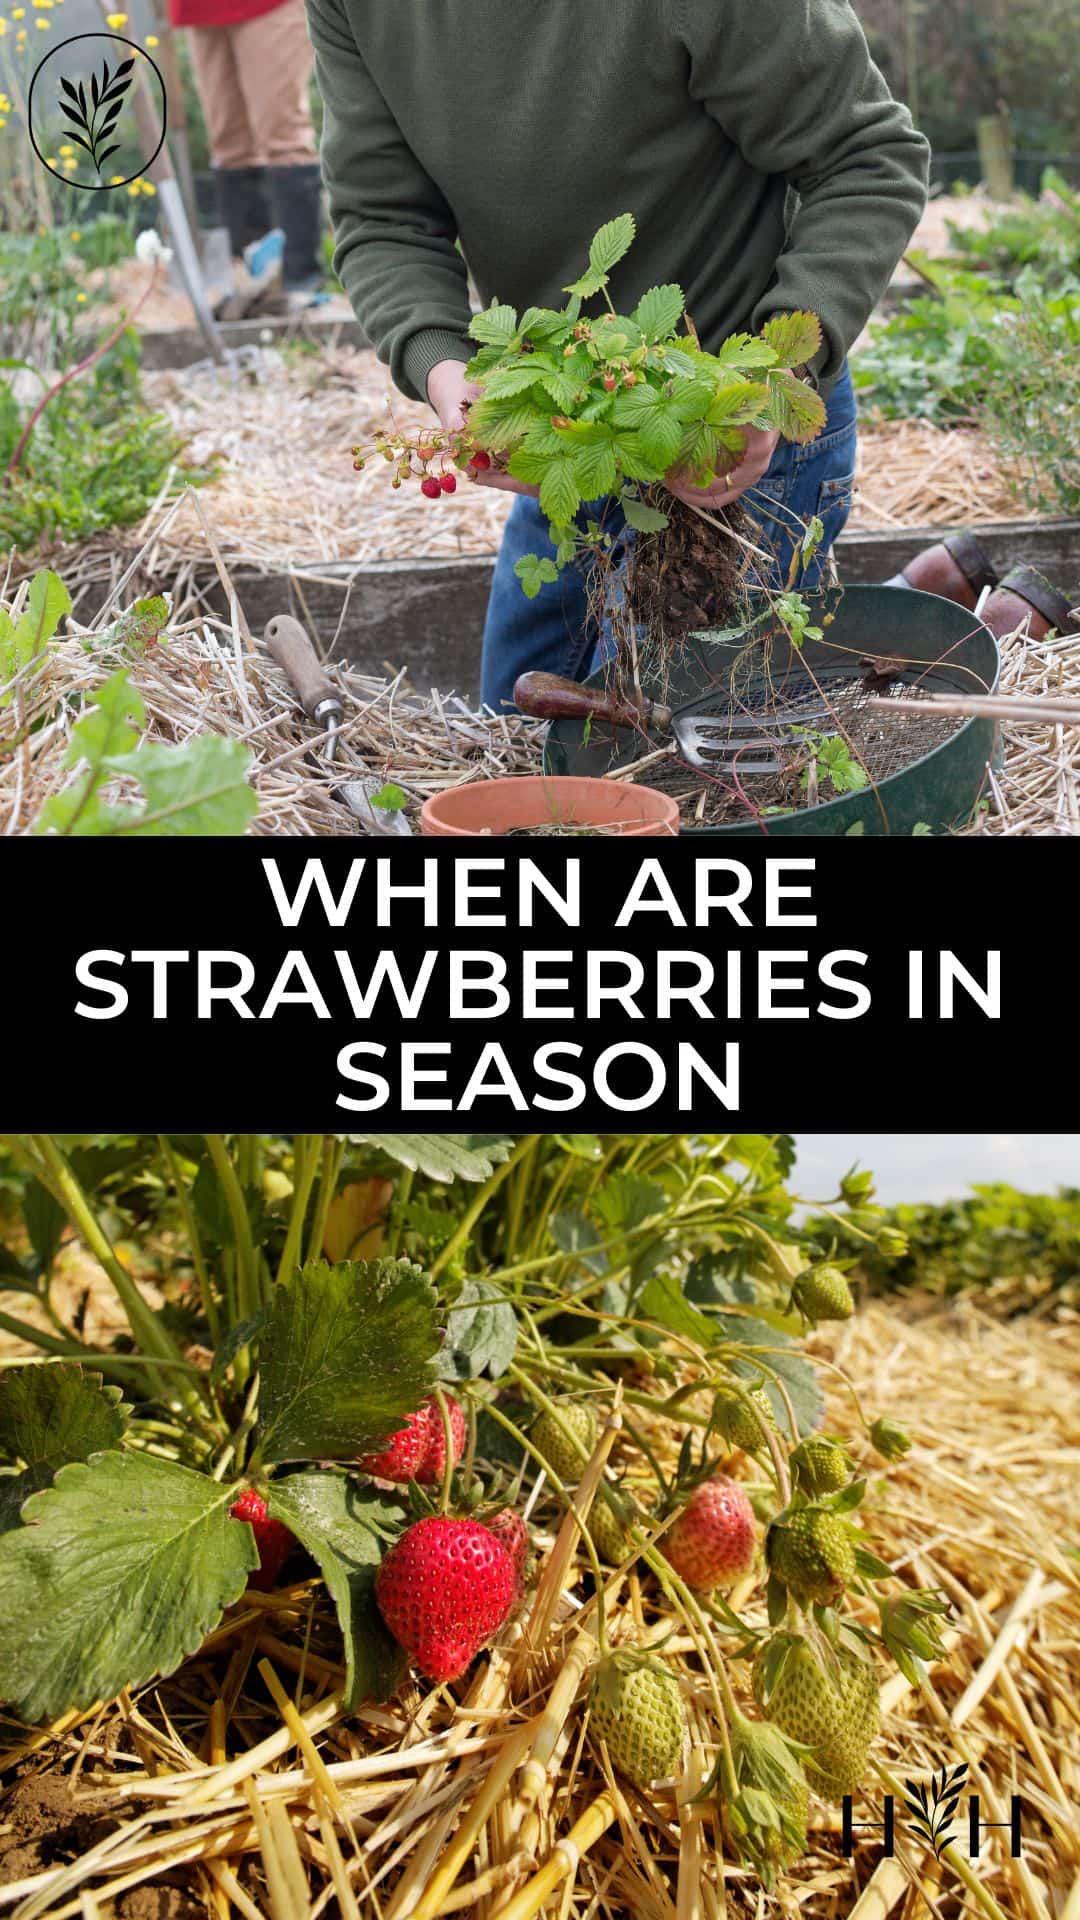 When are strawberries in season via @home4theharvest